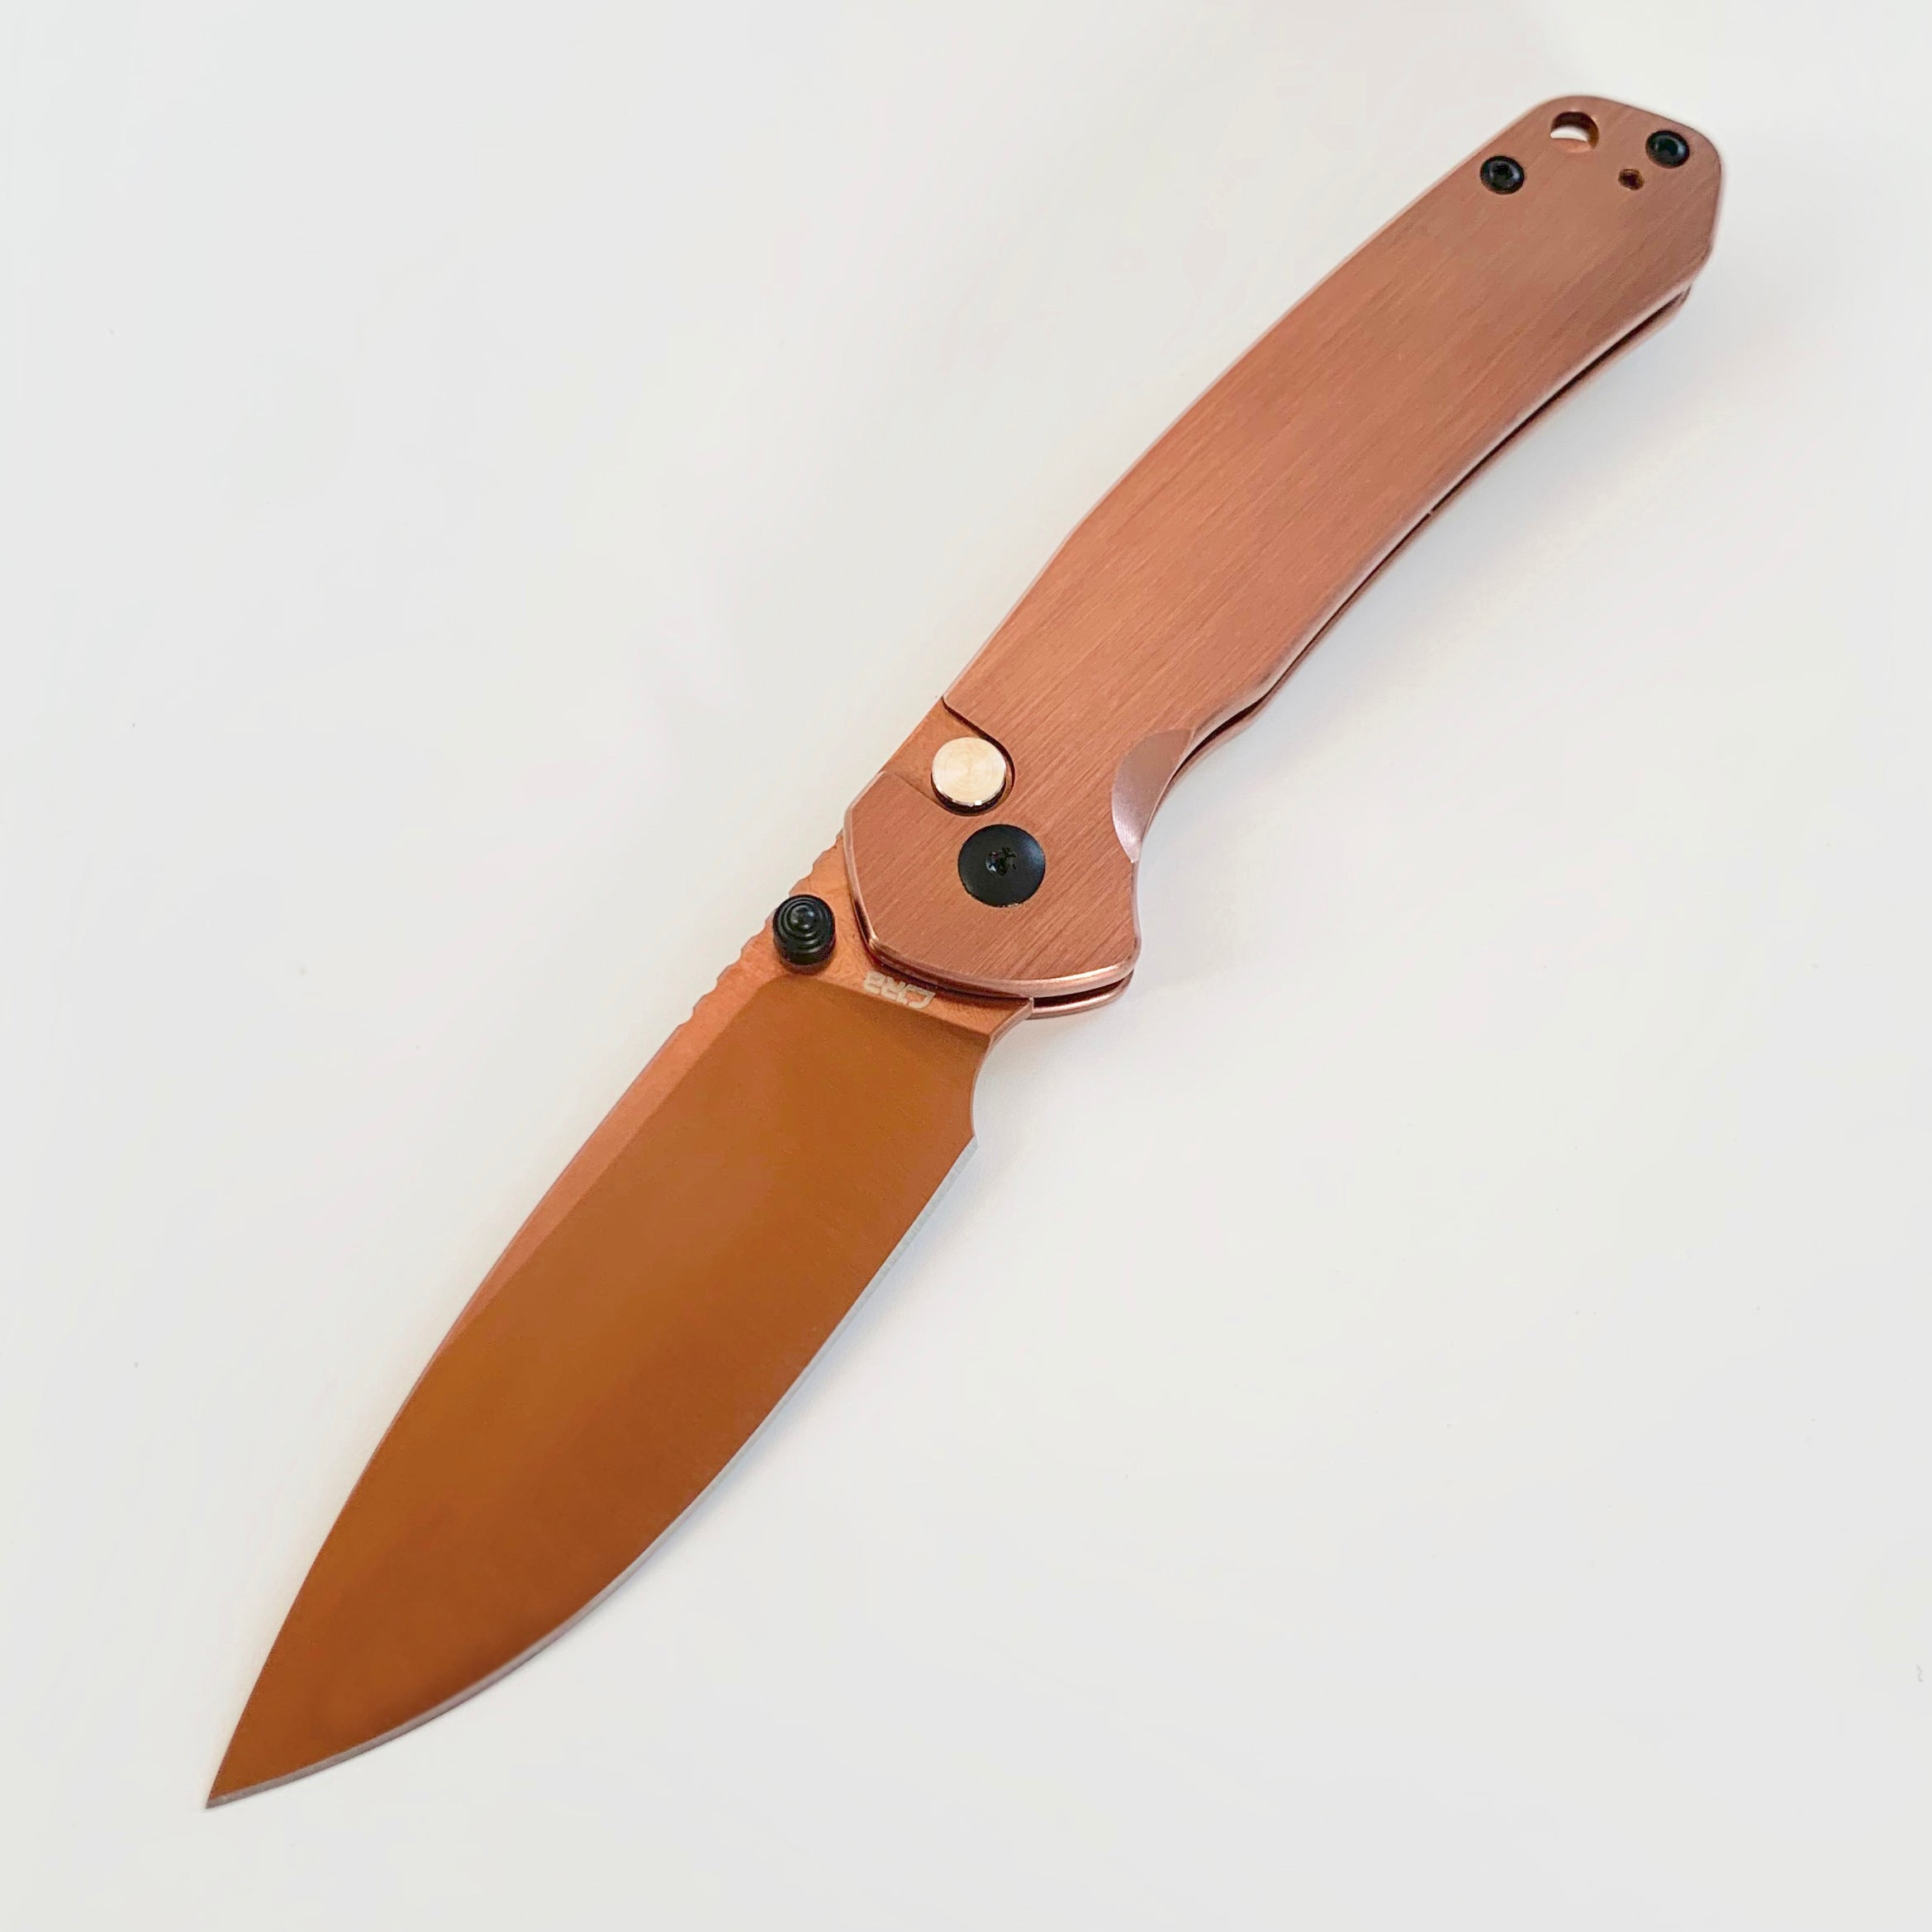 CJRB Pyrite J1925 AR-RPM9 Steel Blade Steel Handle Folding Knives Copper Colored